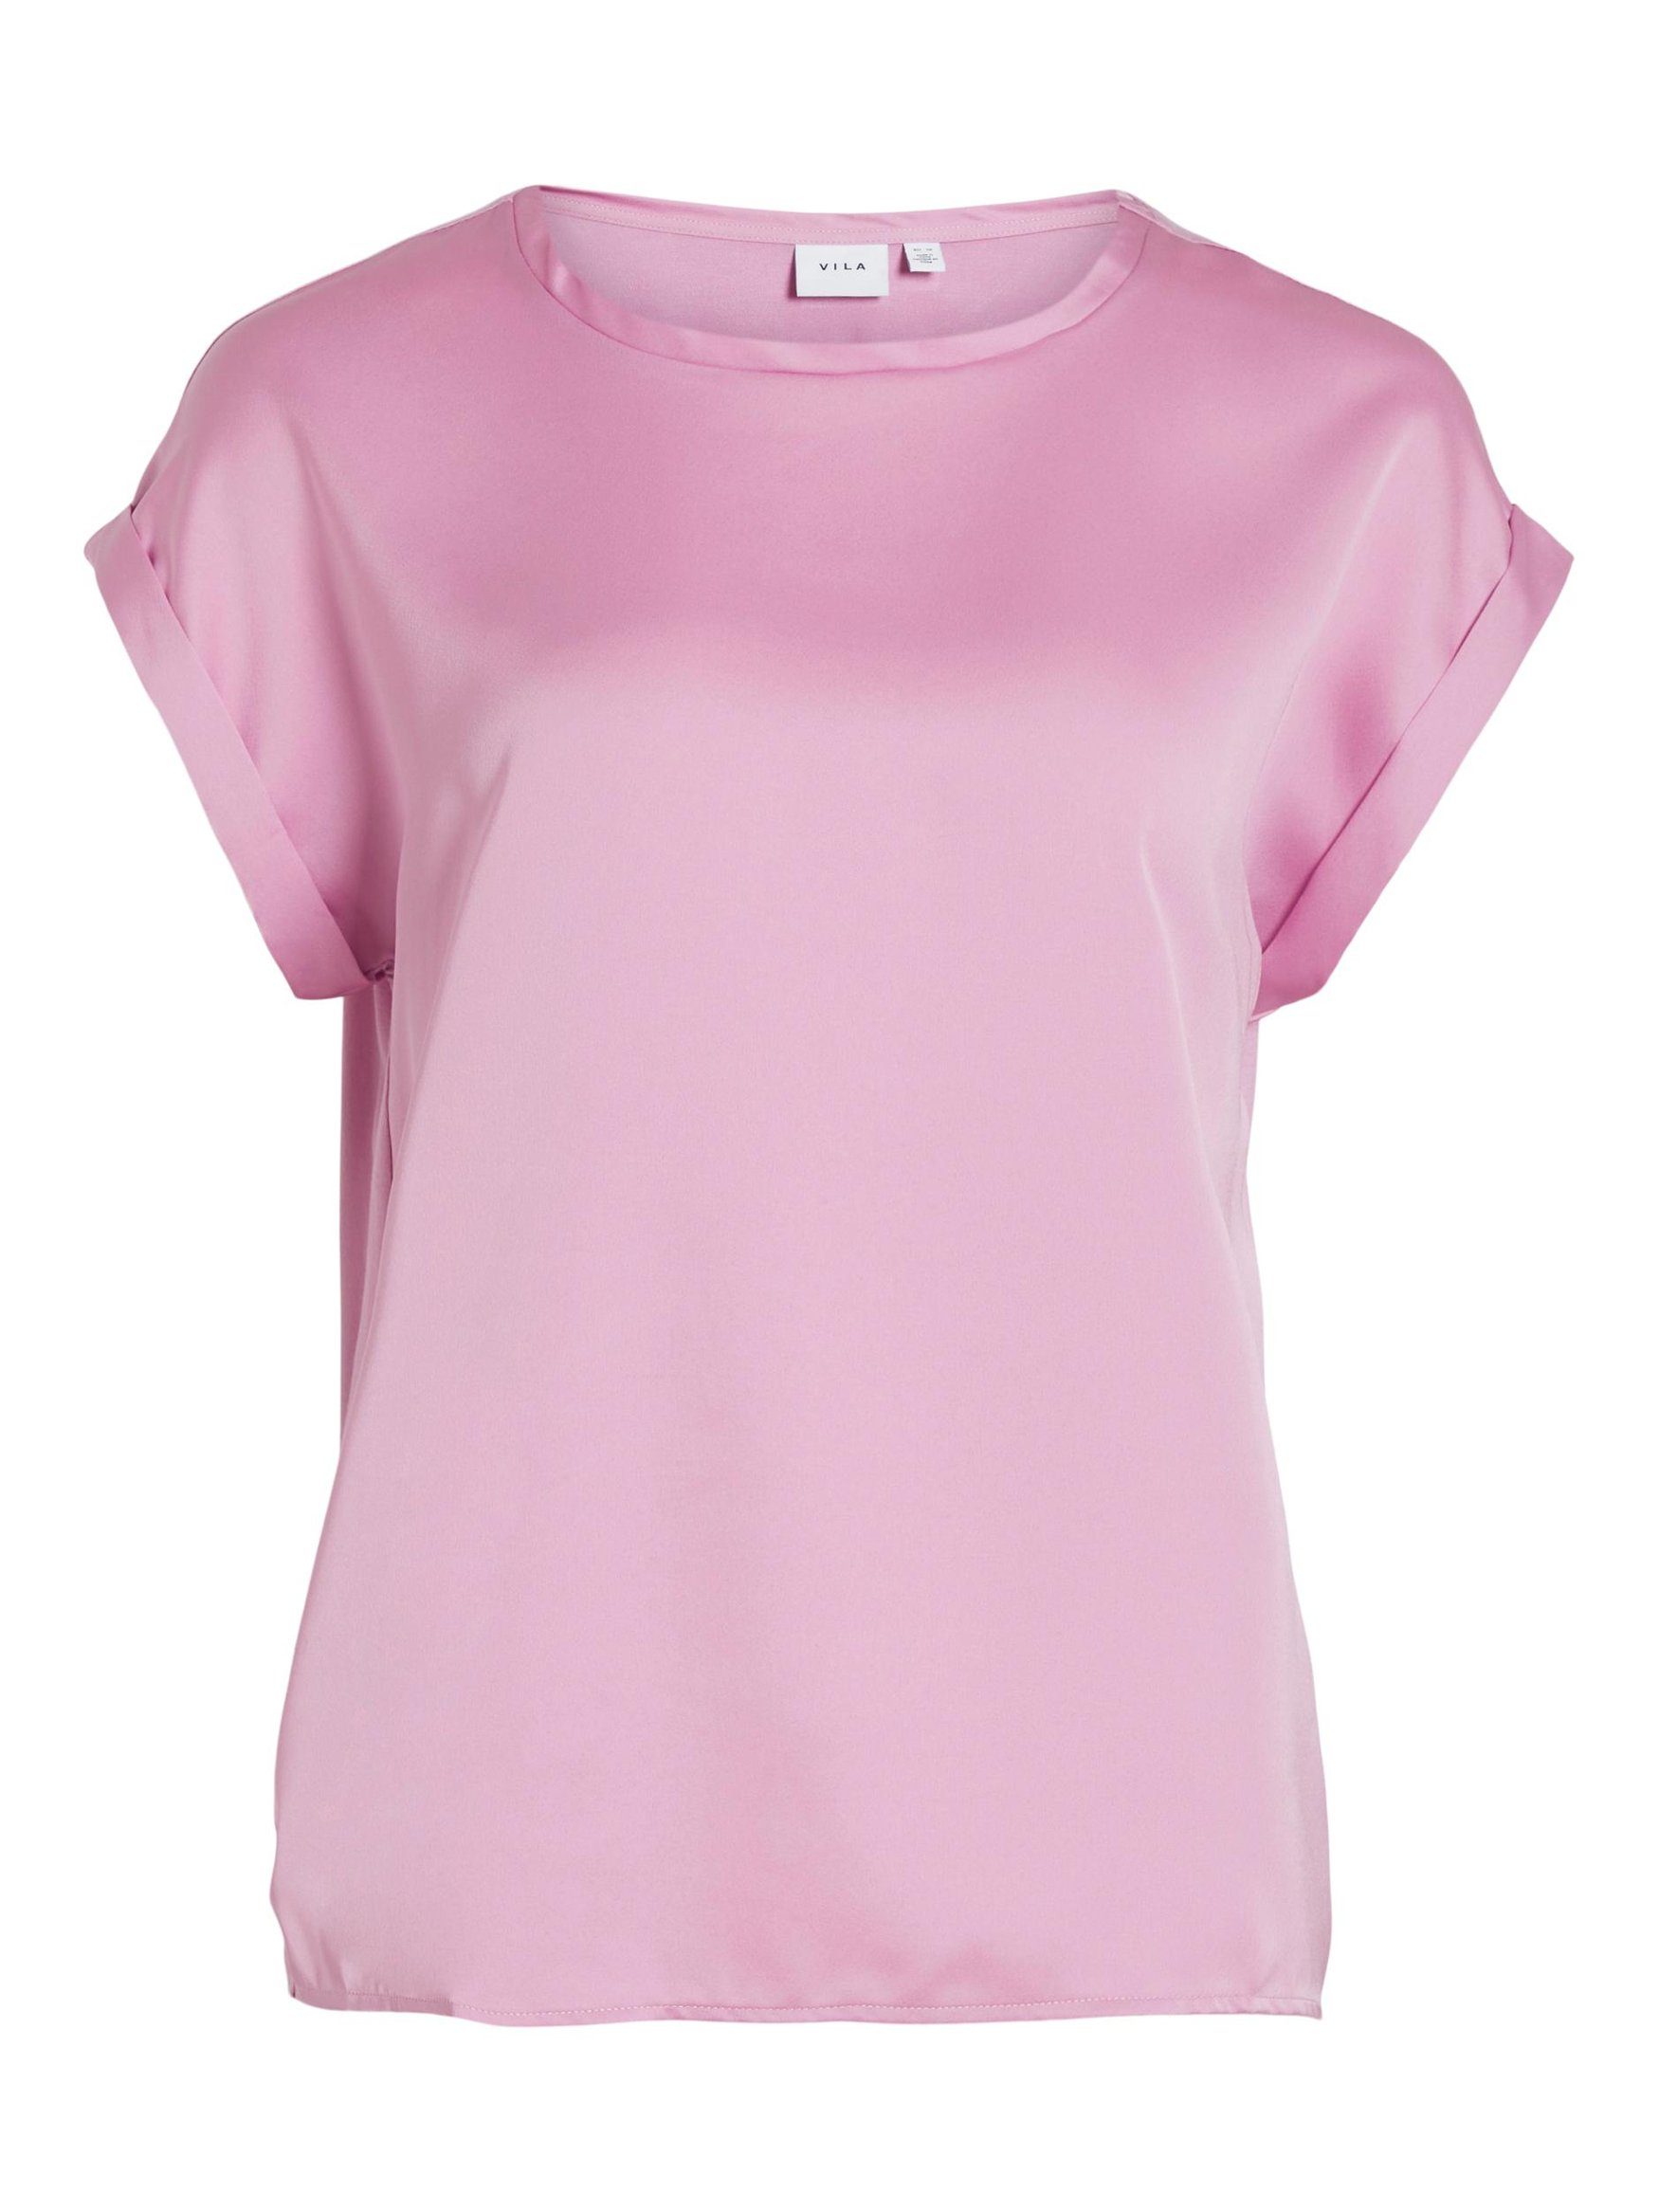 Vila T-Shirt Satain Blusen T-Shirt Kurzarm Basic Top Glänzend VIELLETTE 4599 in Rosa-2